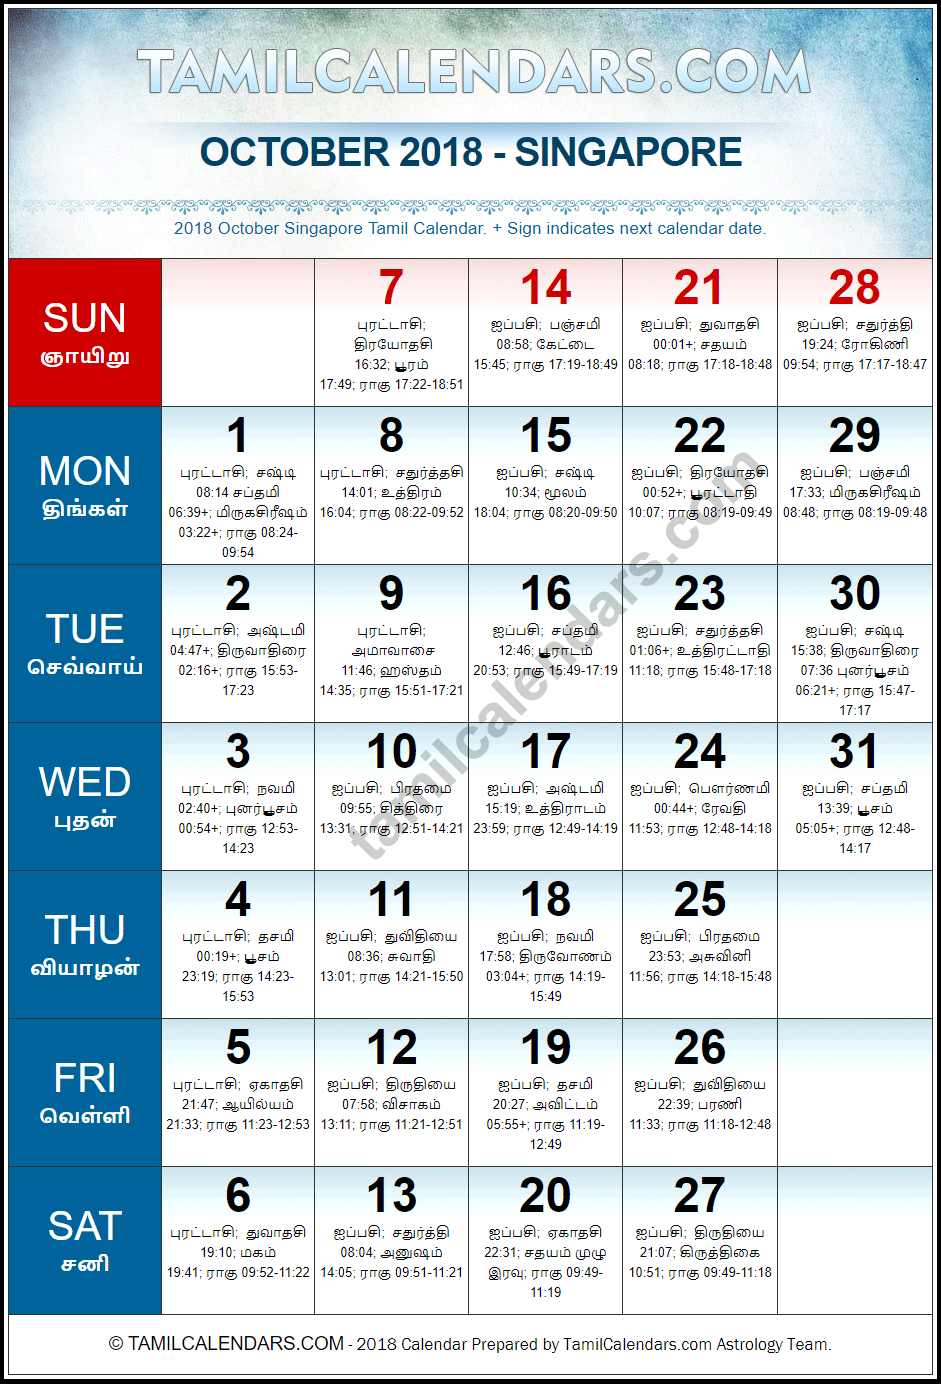 October 2018 Tamil Calendar for Singapore